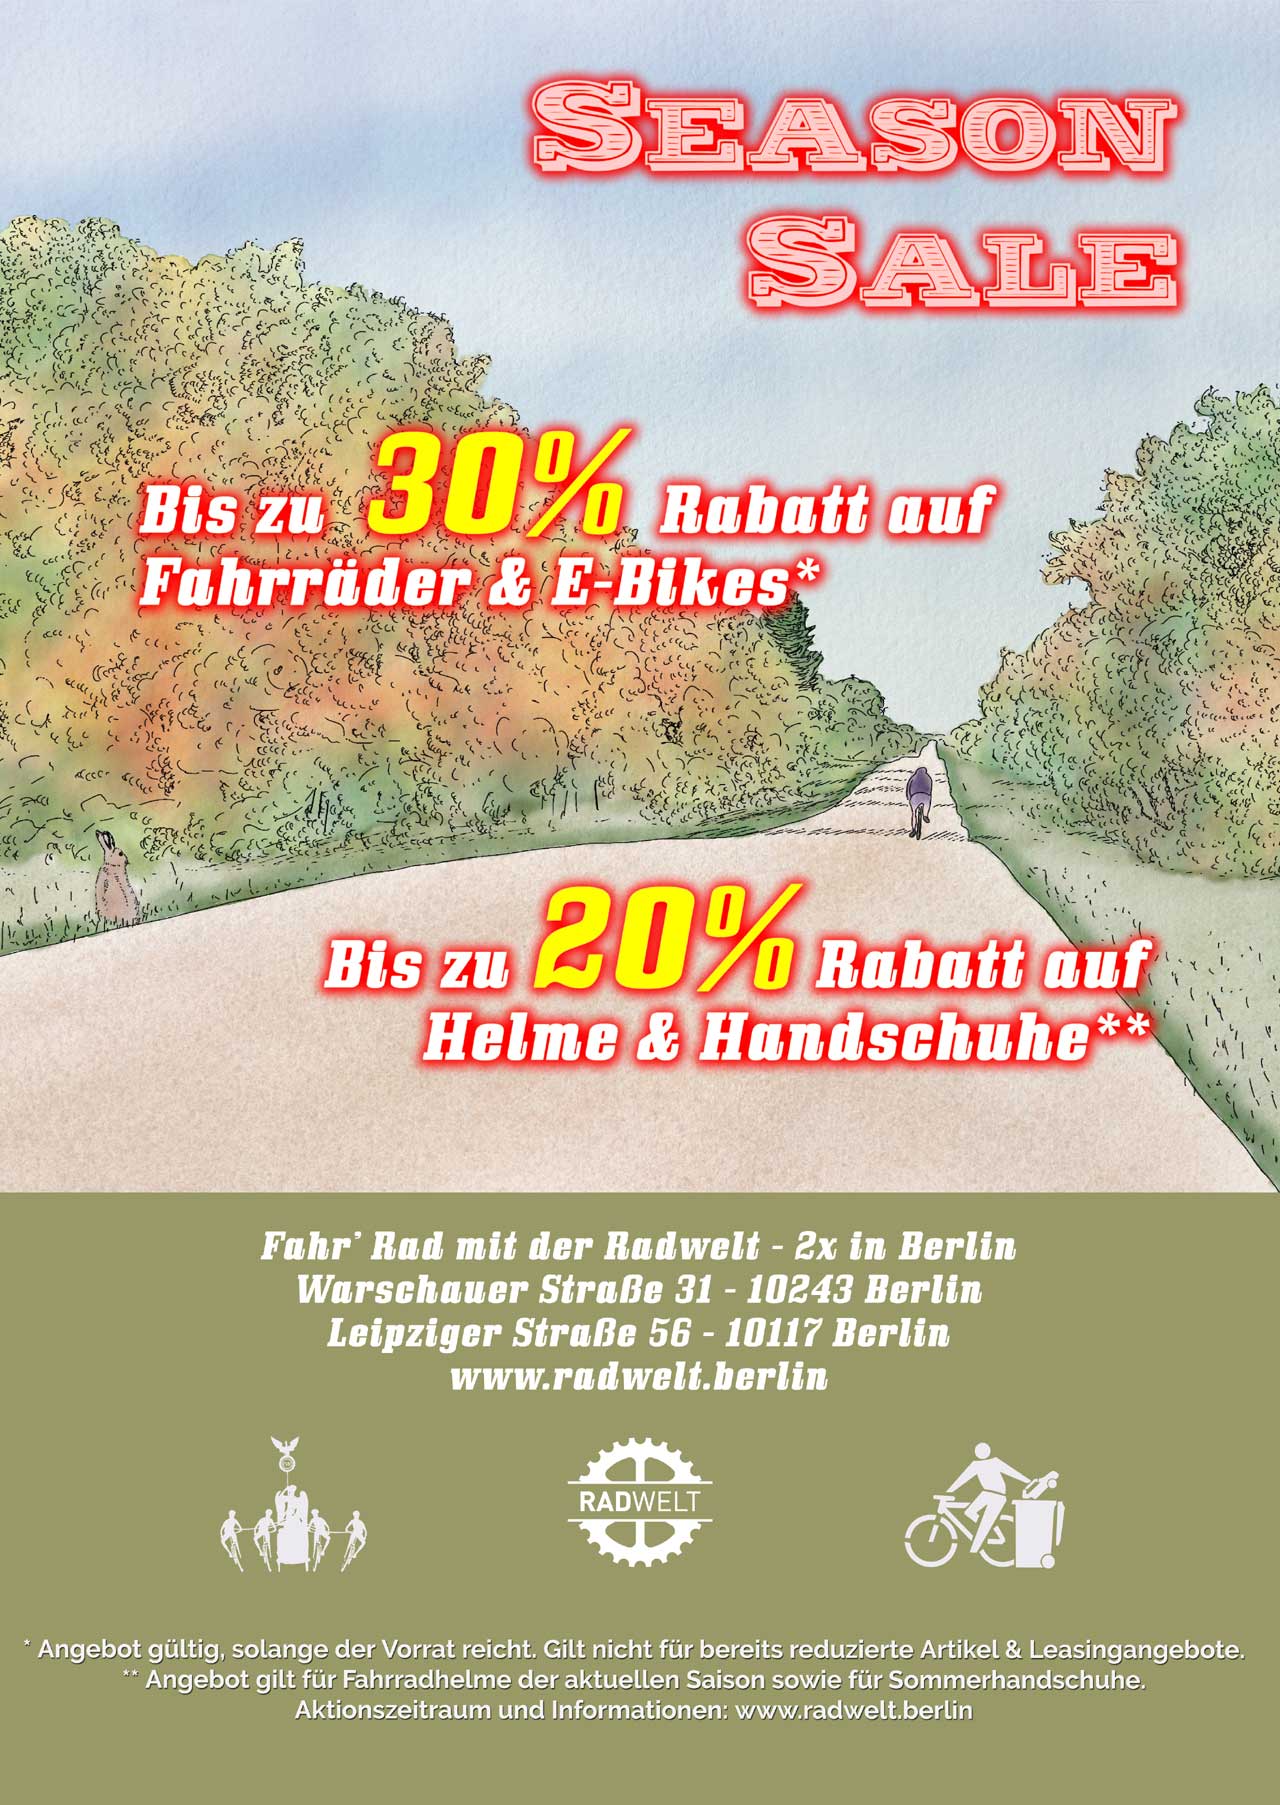 Radwelt Berlin Season Sale